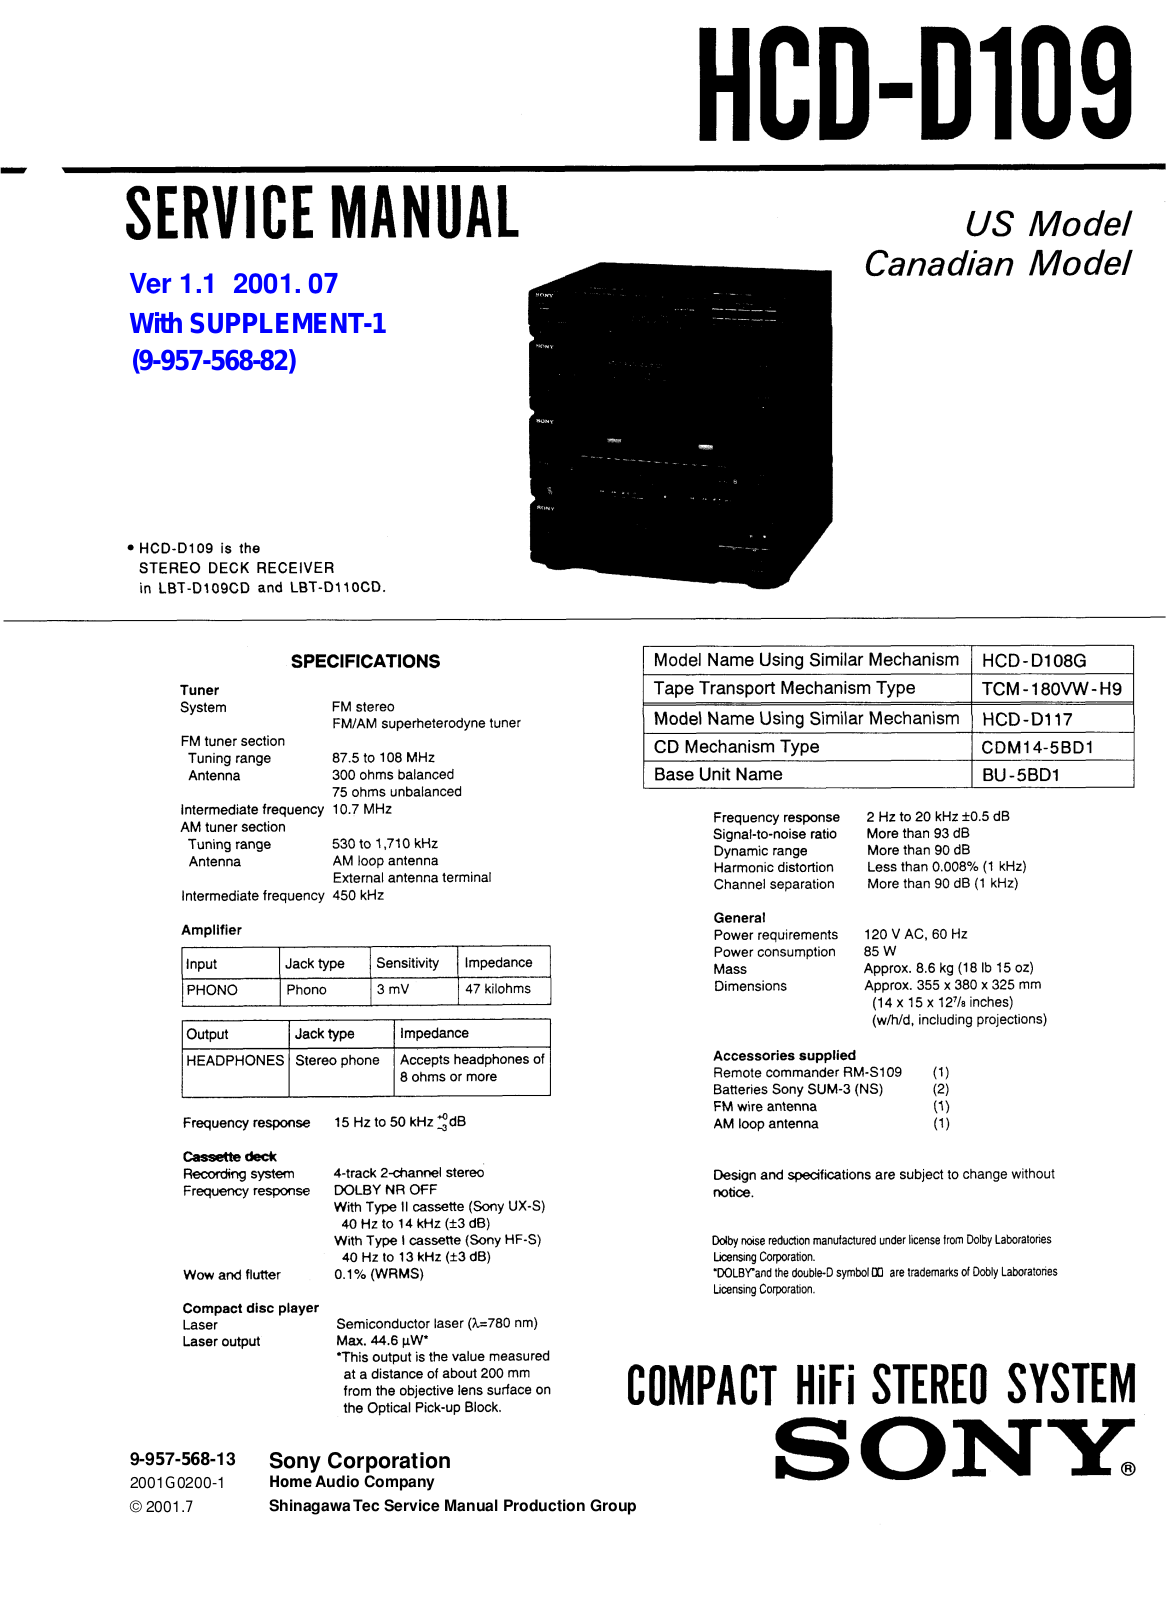 Sony HCD D109 Service Manual